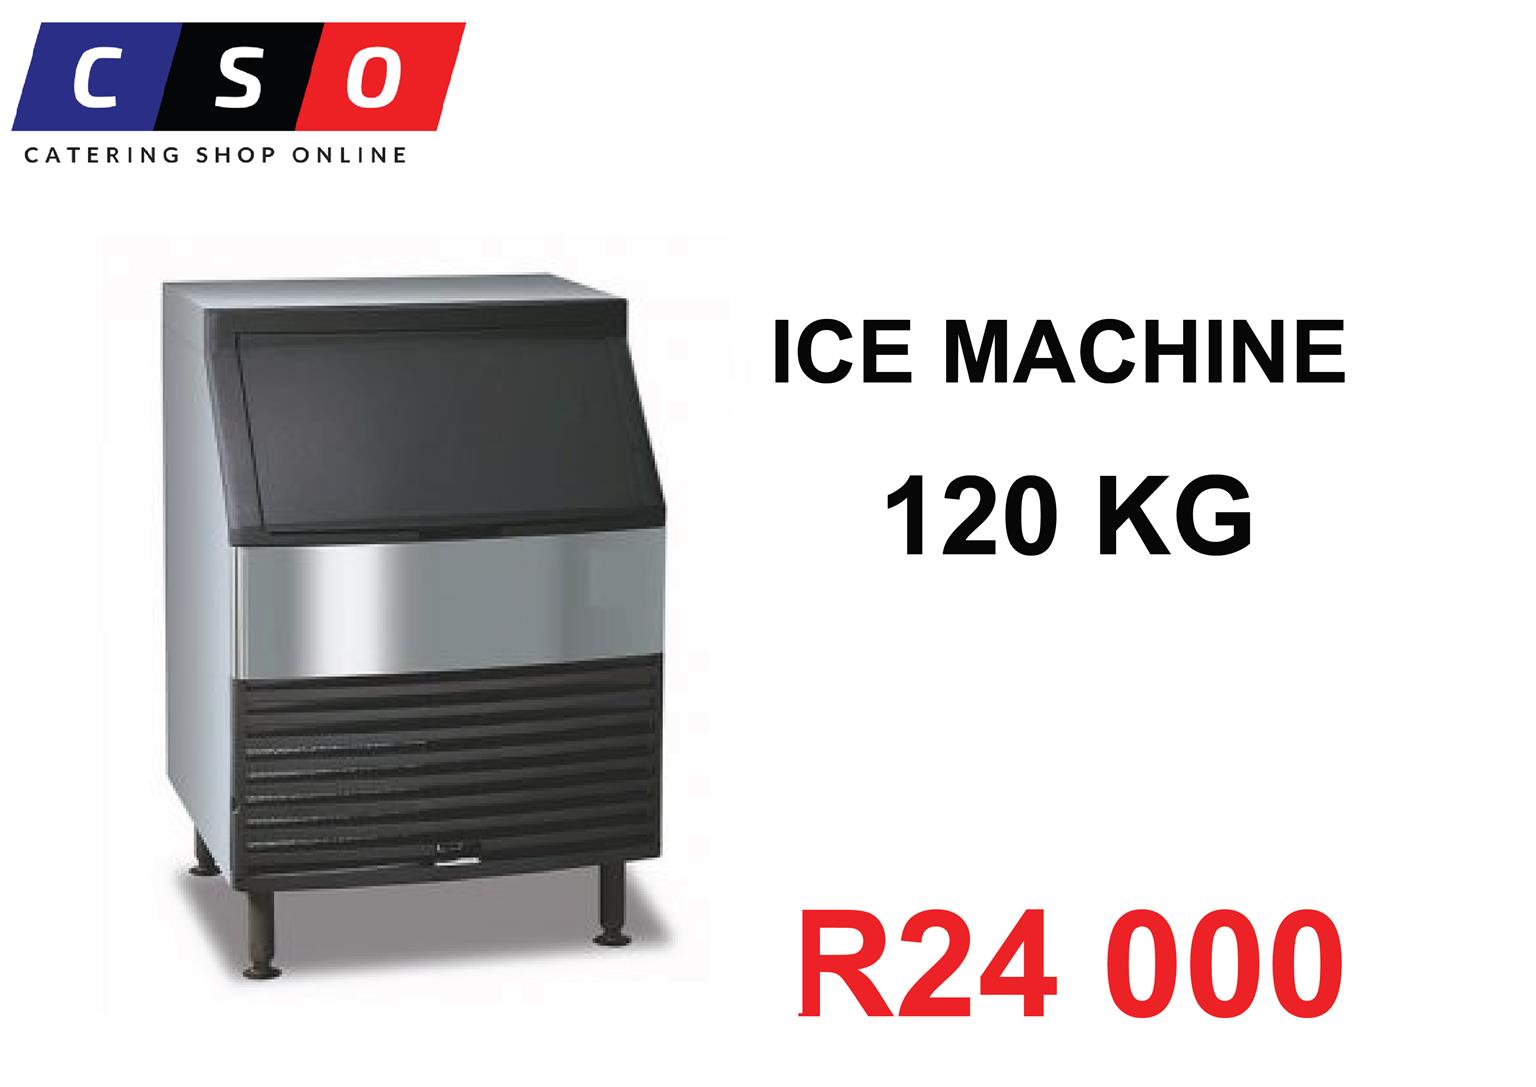 ICE MACHINE SPECIAL DEALS LOW PRICE